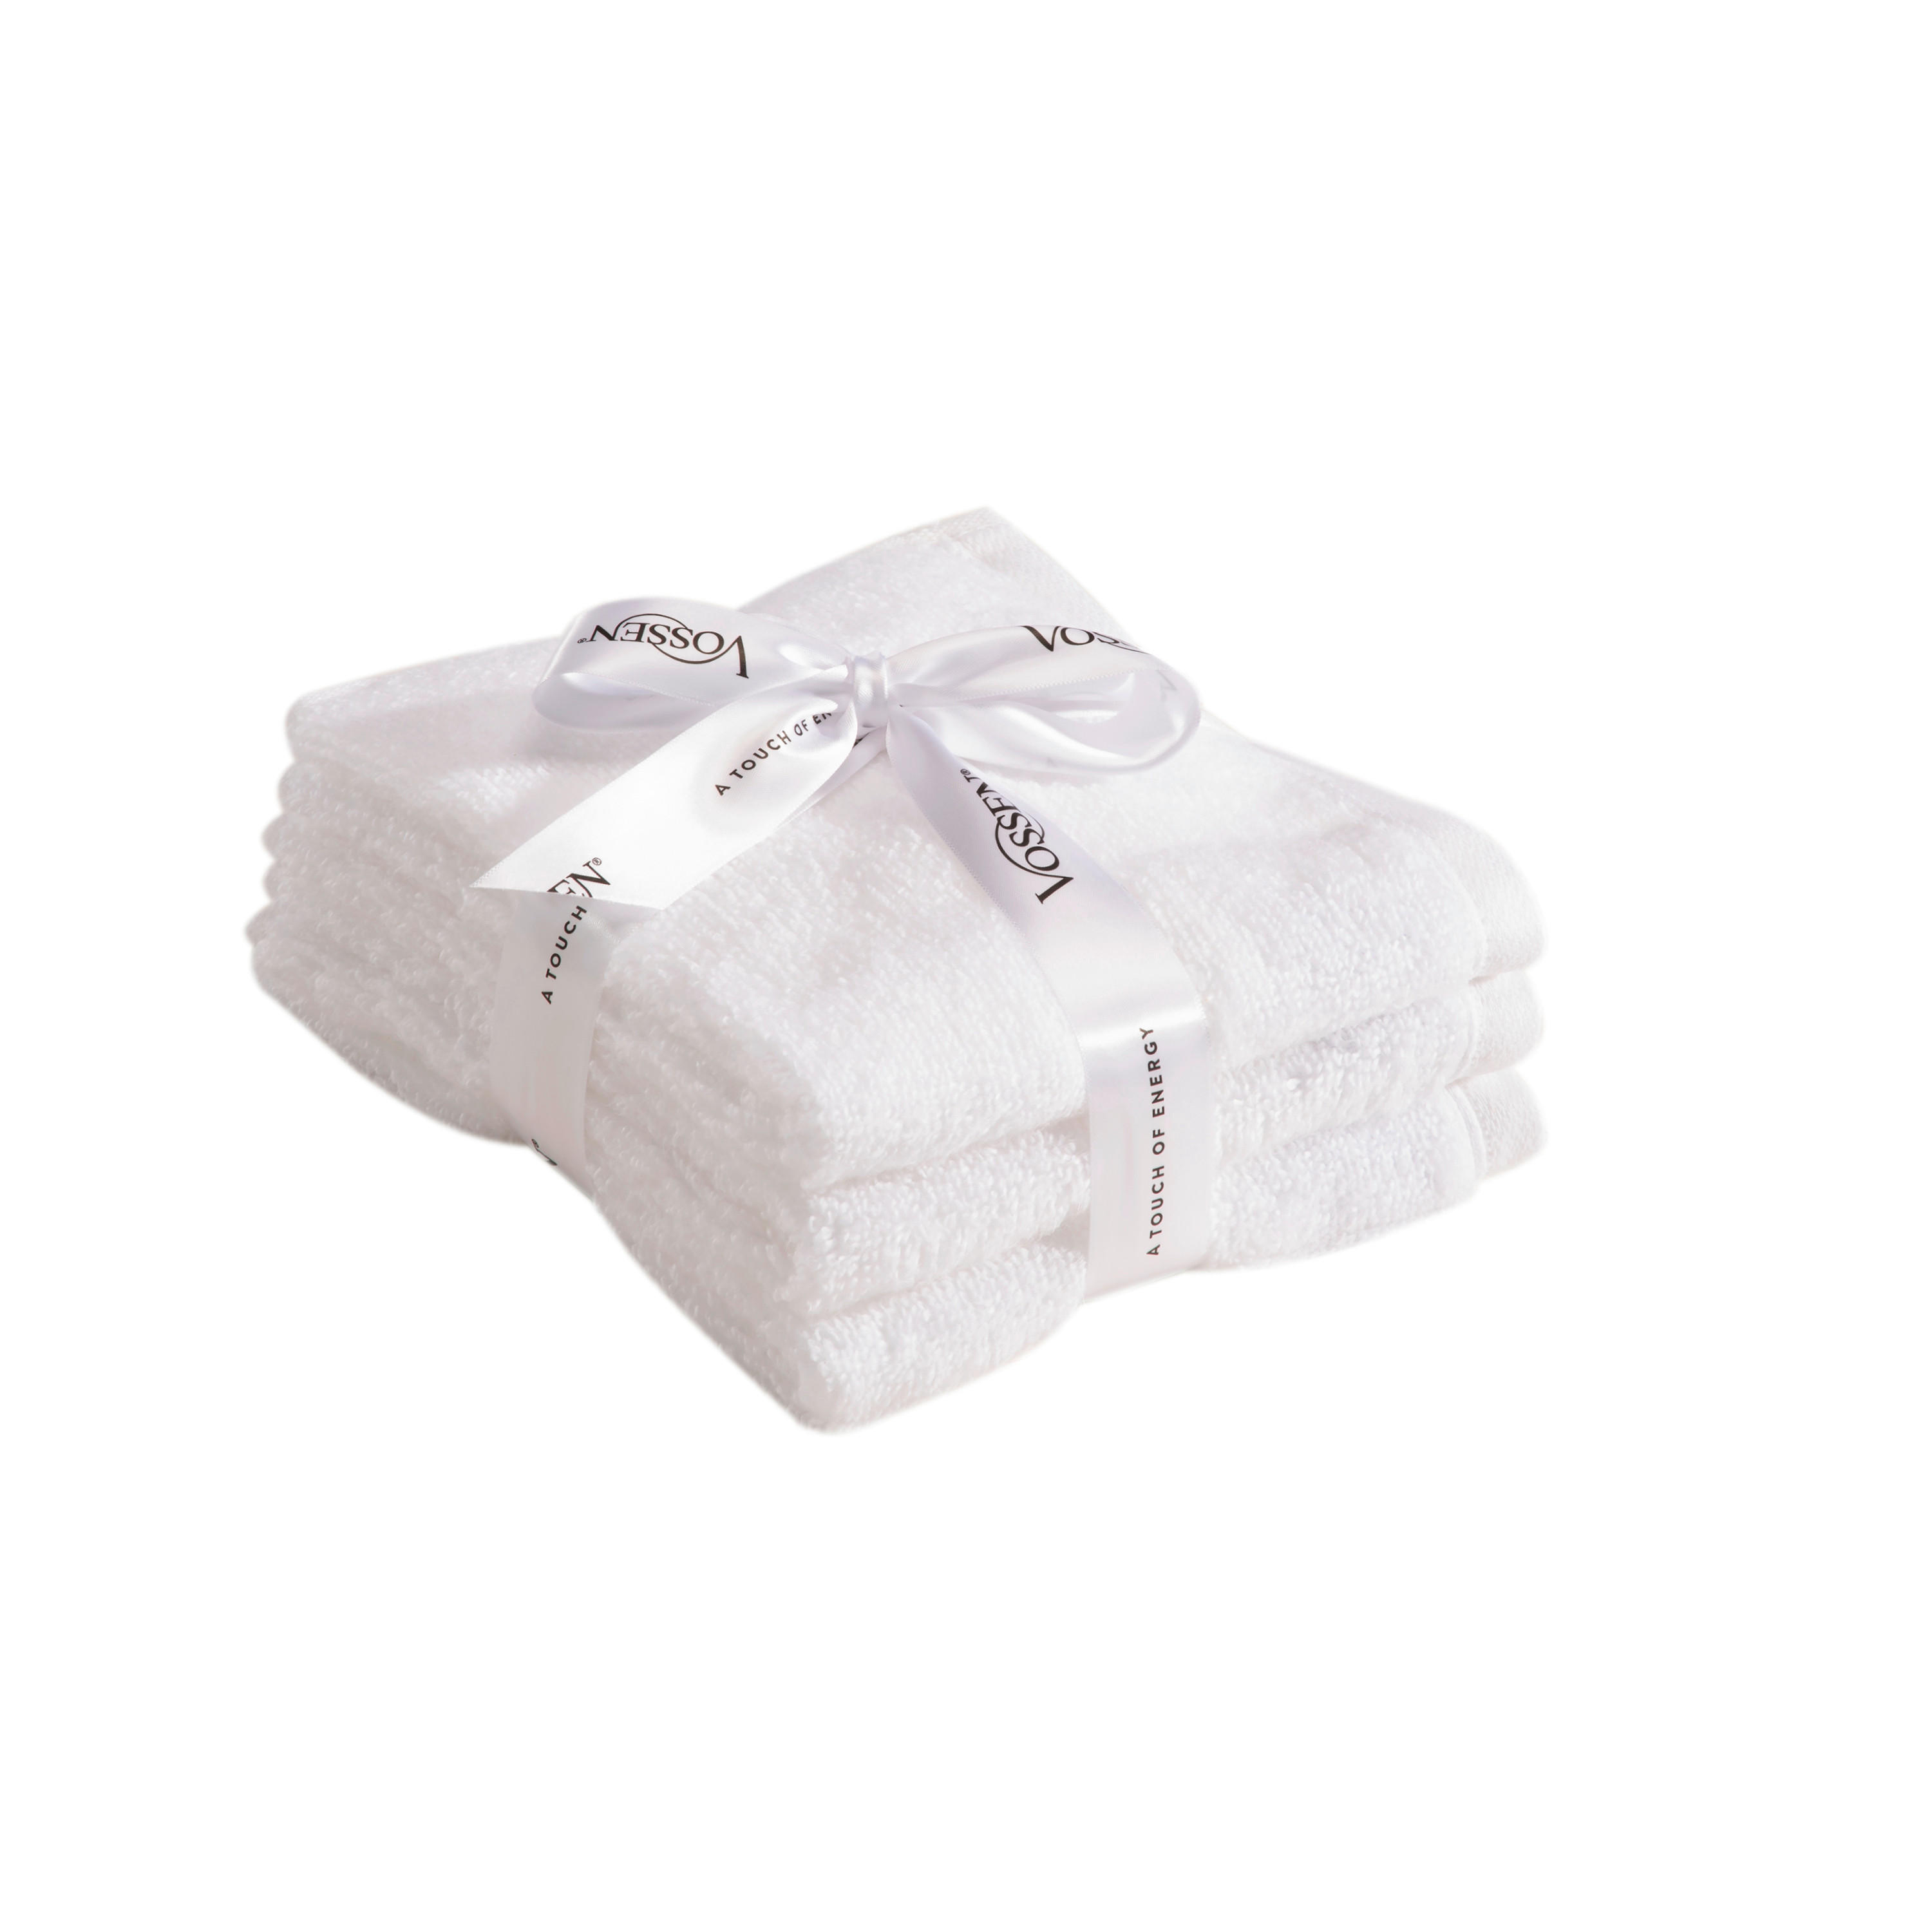 GÄSTETUCH Smart Towel 3-teilig  - Weiß, Basics, Textil (30/50cm) - Vossen